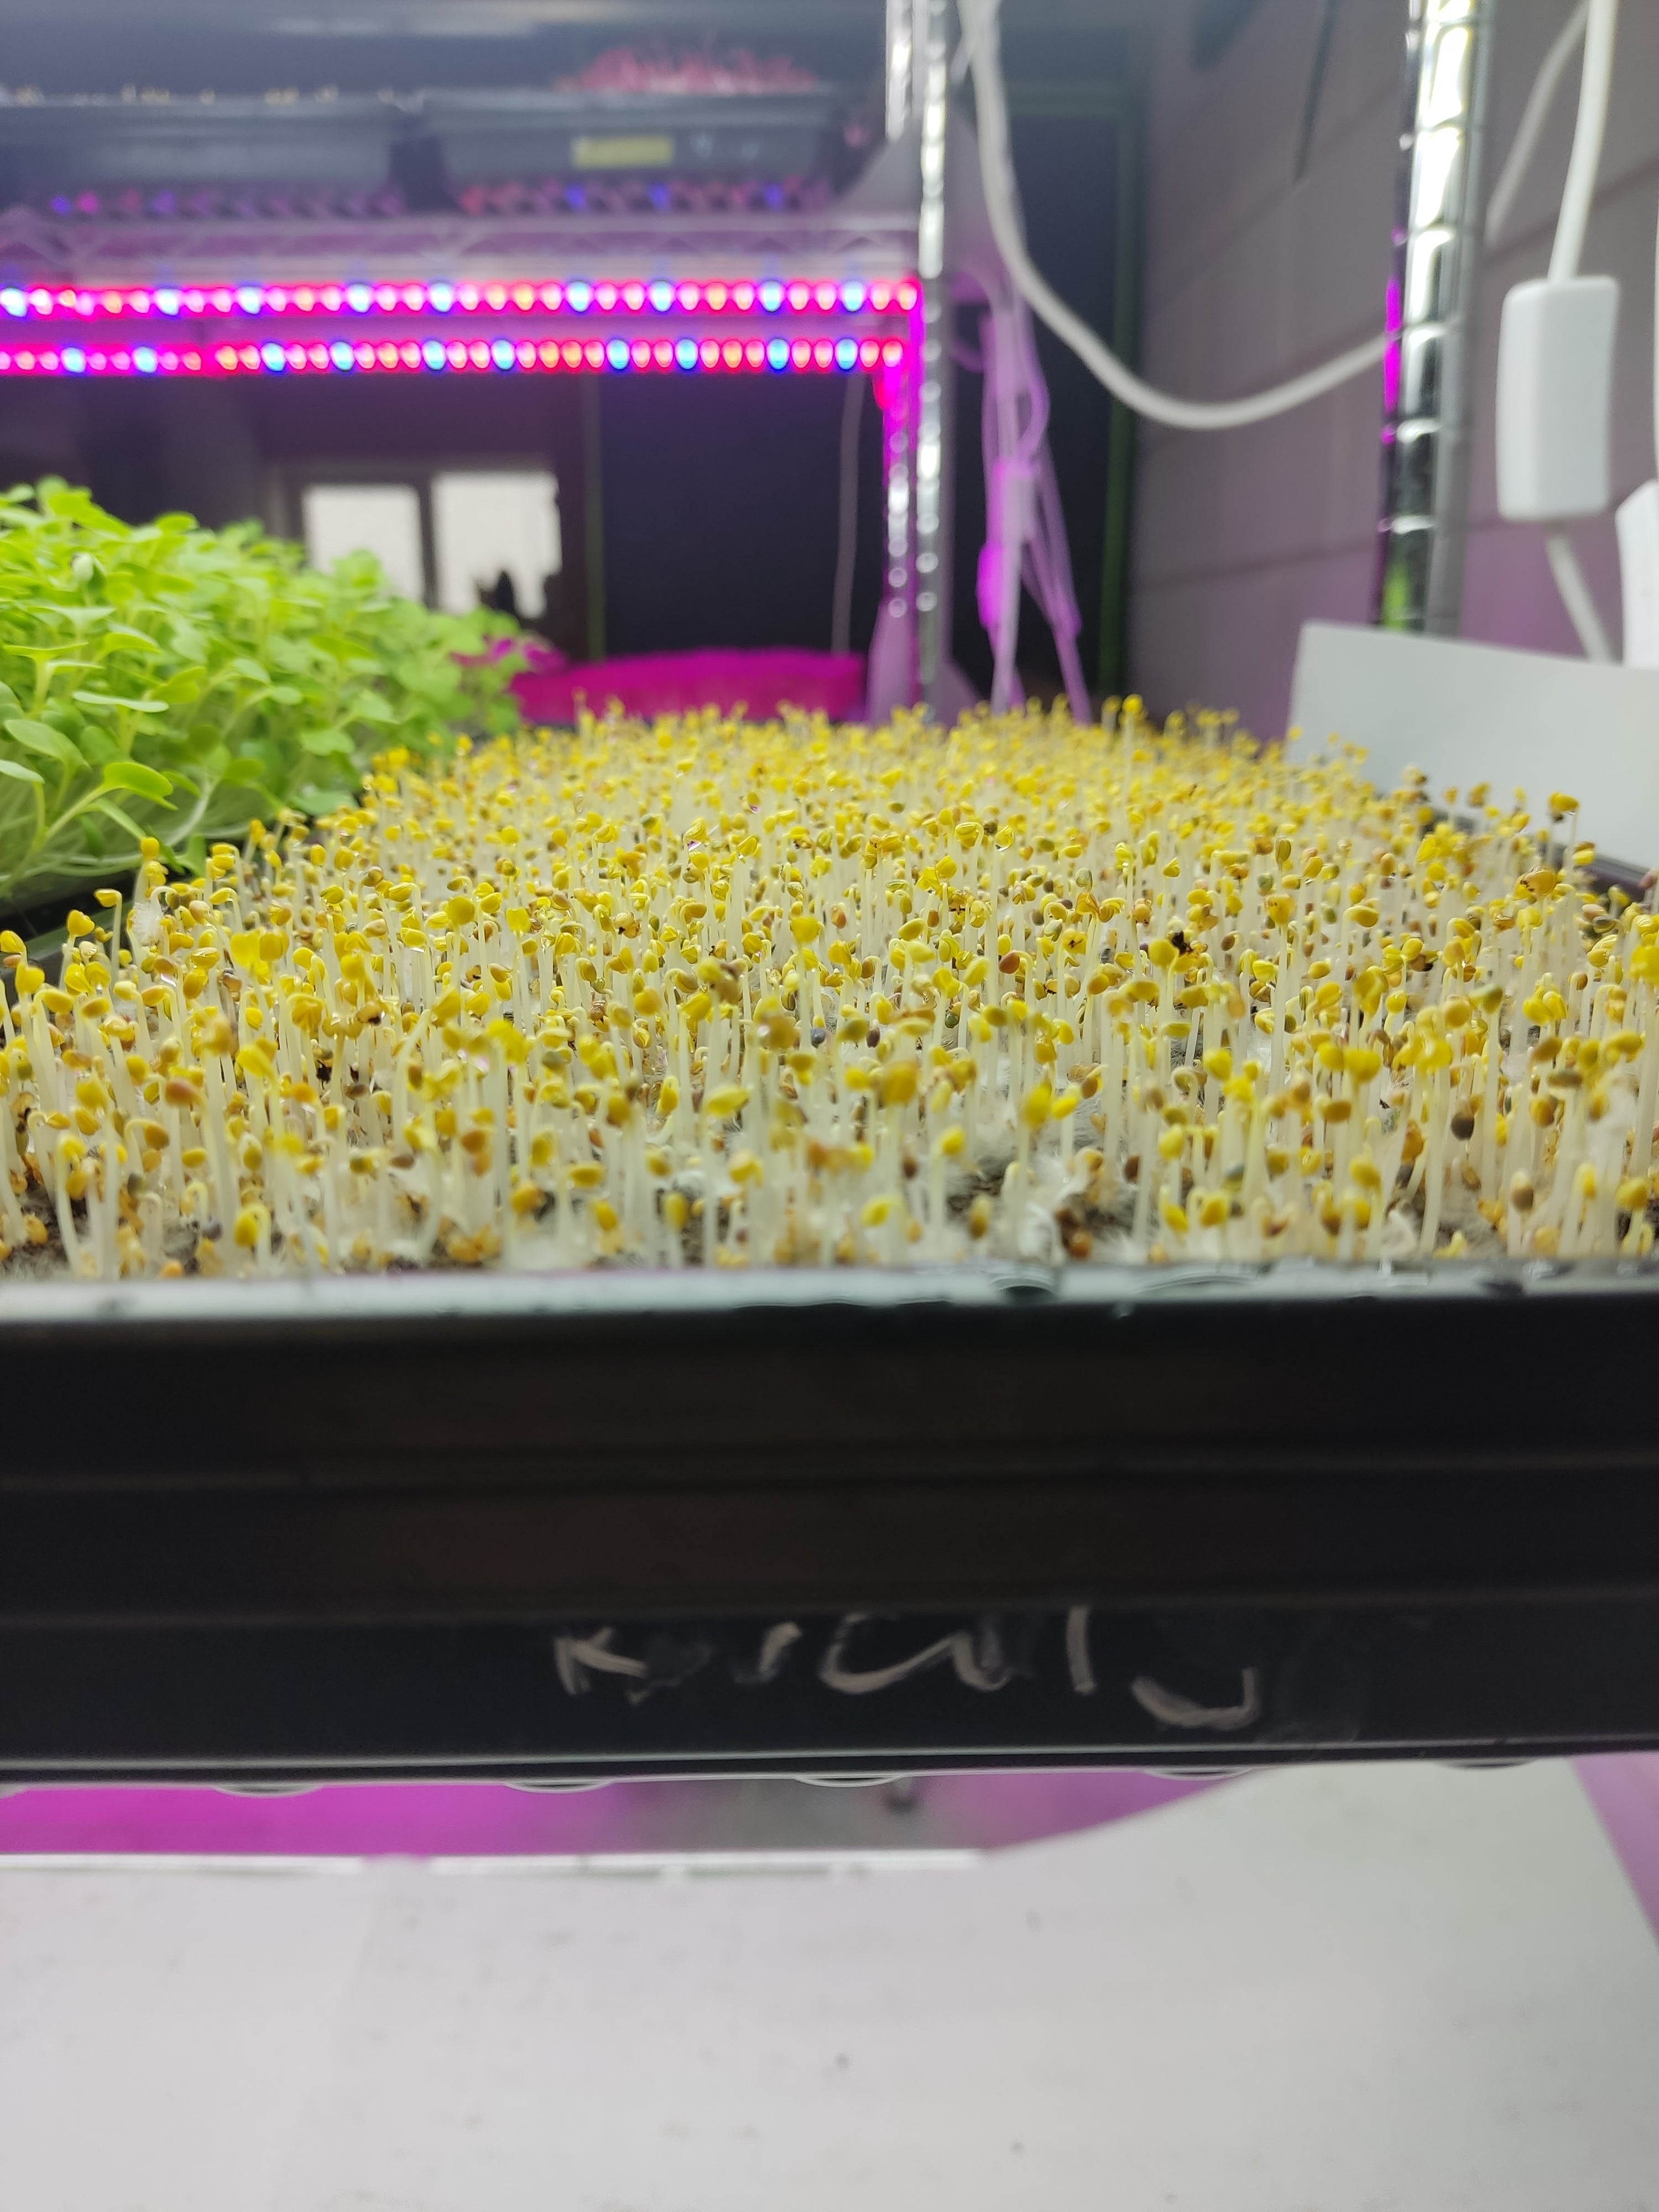 1020 Microgreen Shallow Grow Tray (2 varianten)